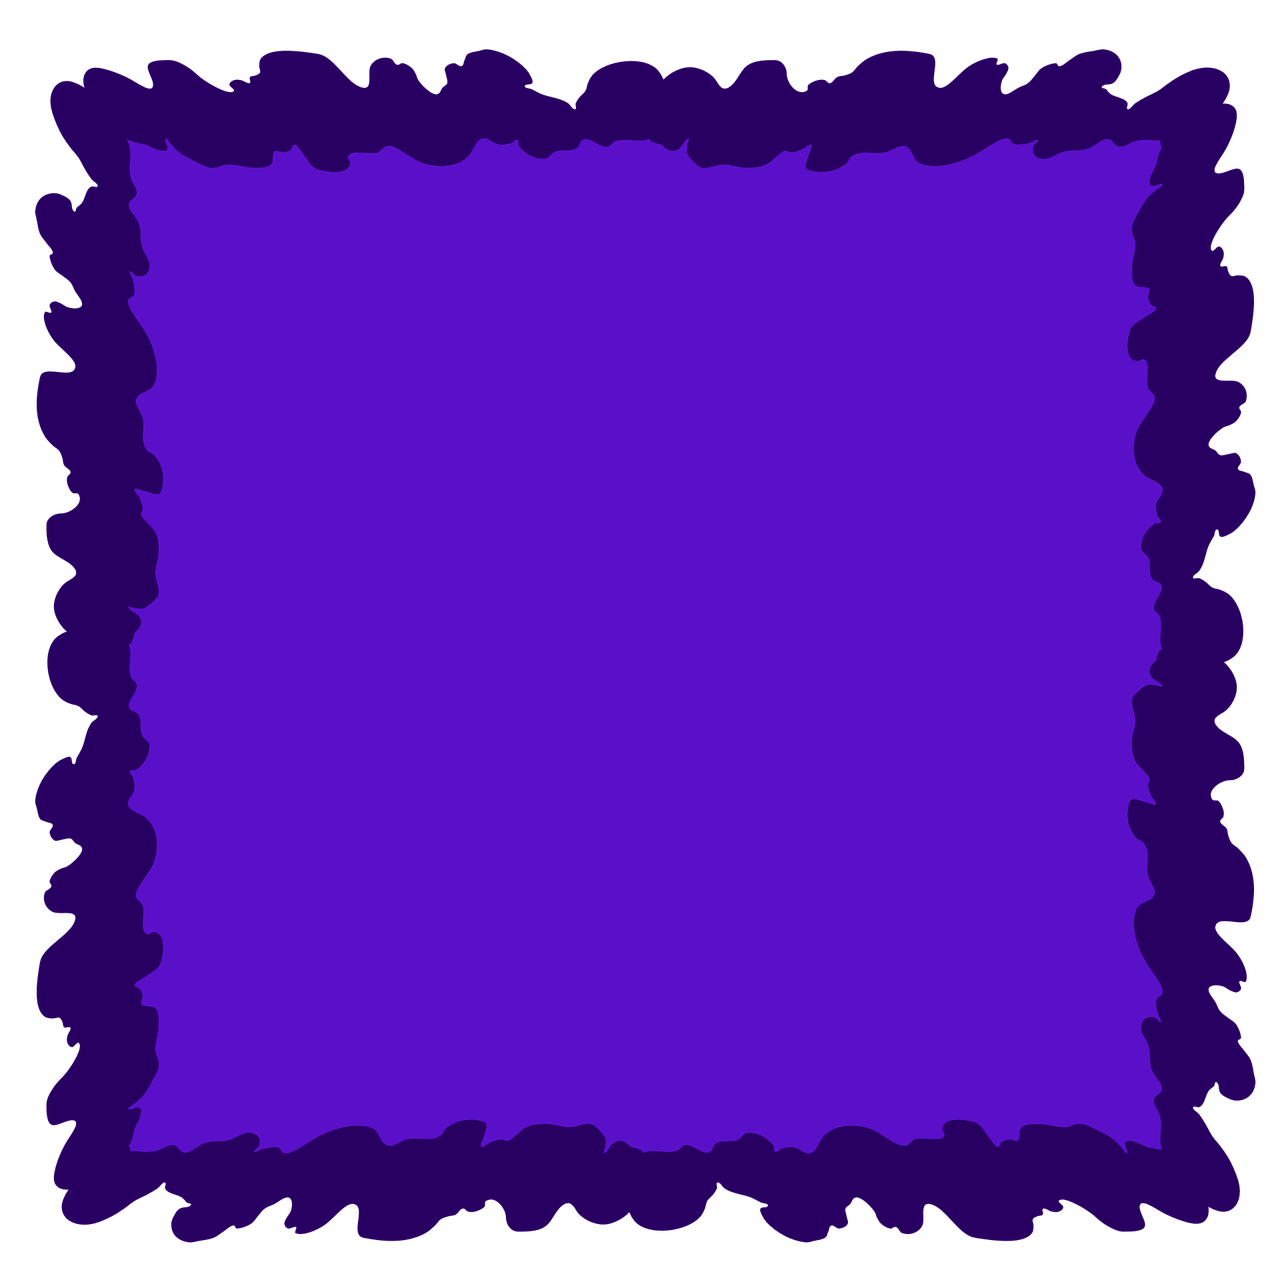 purple frame background free photo